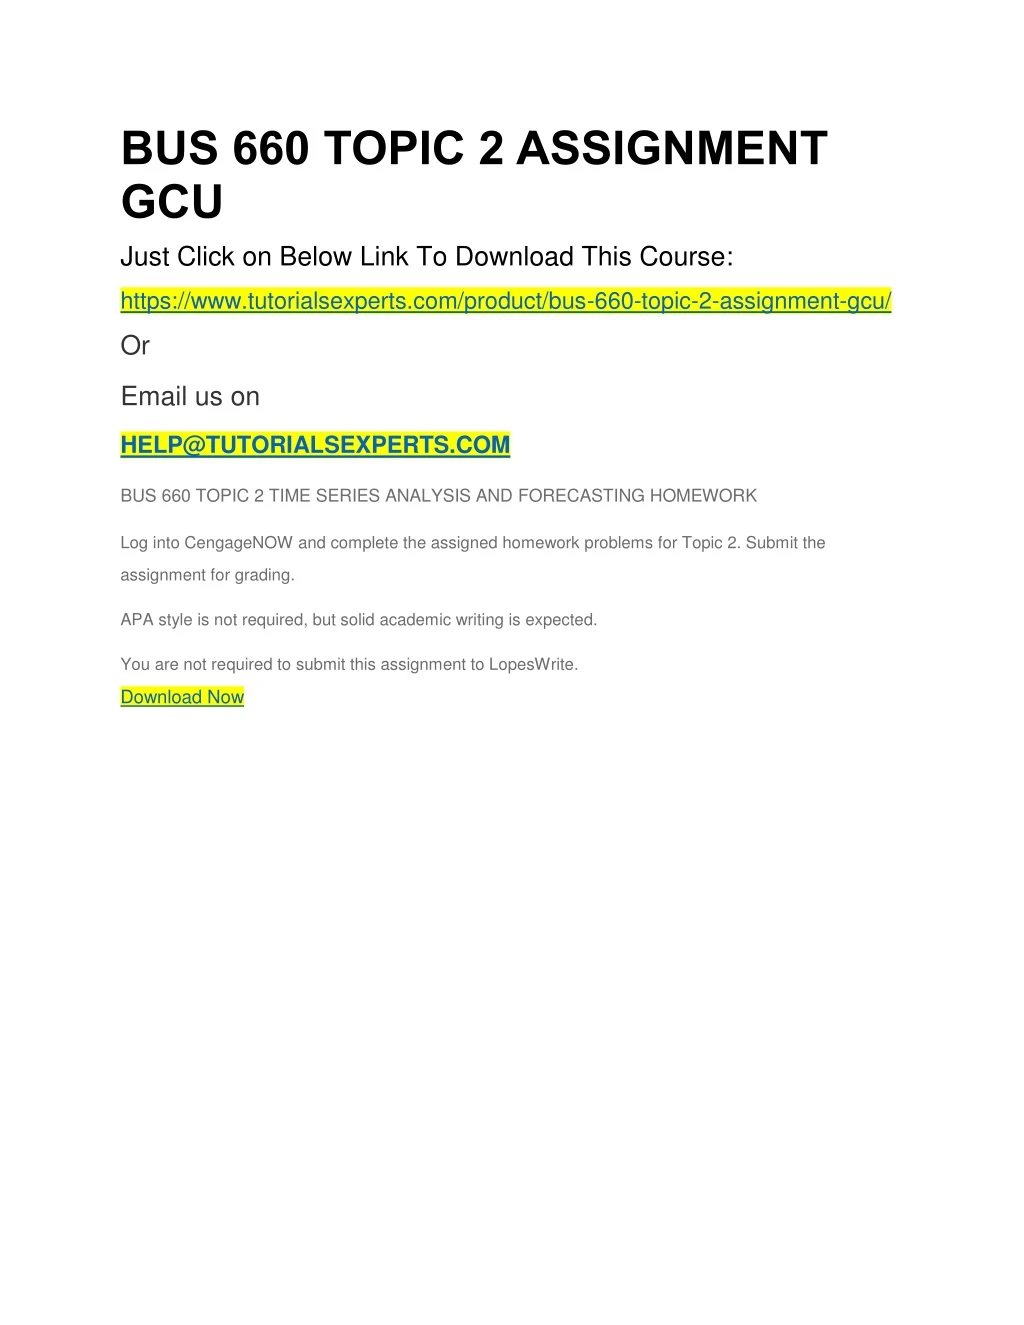 bus 660 topic 2 assignment gcu just click